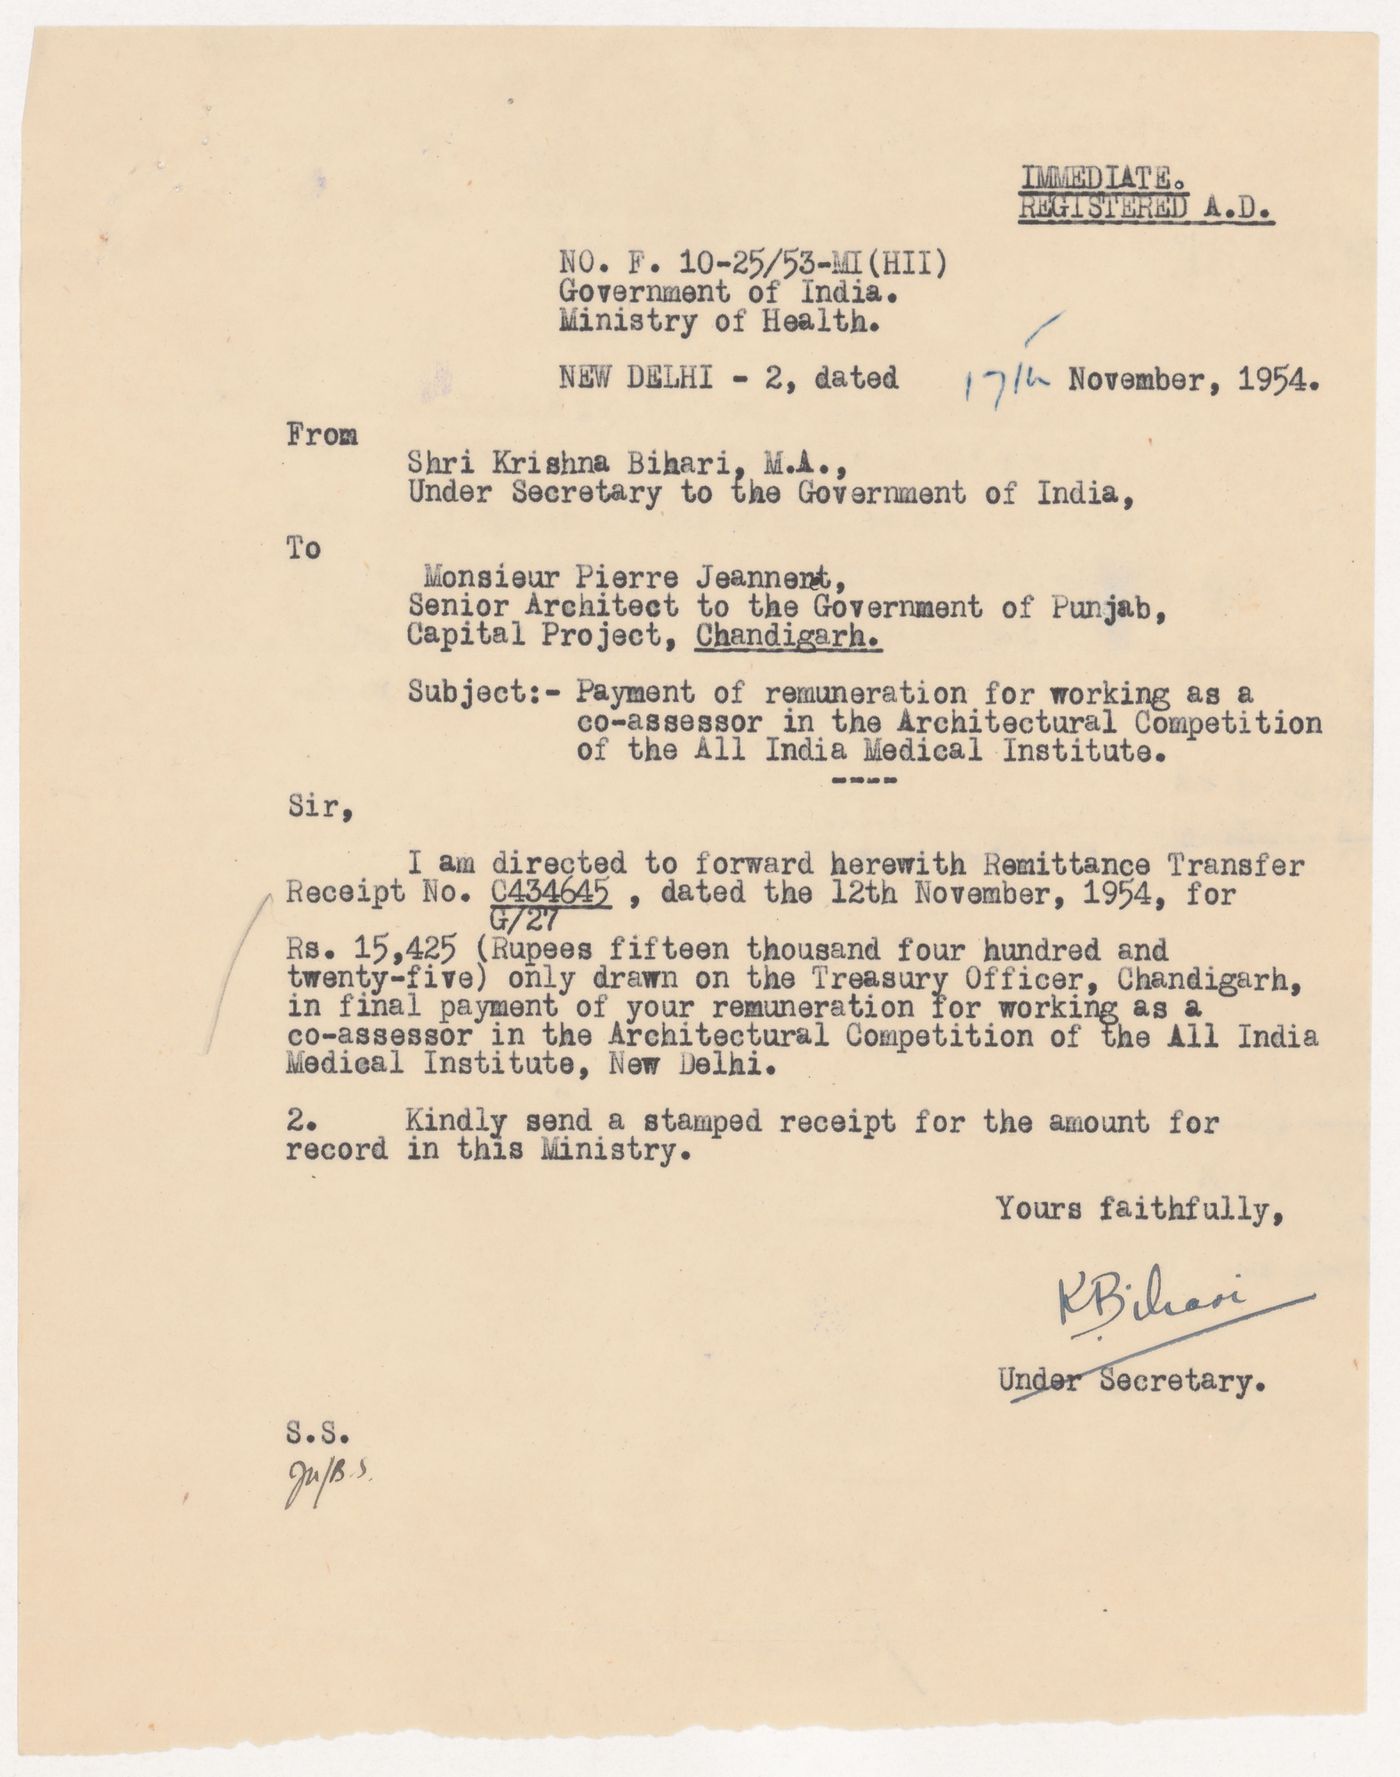 Letter from Krishna Bihari to Pierre Jeanneret